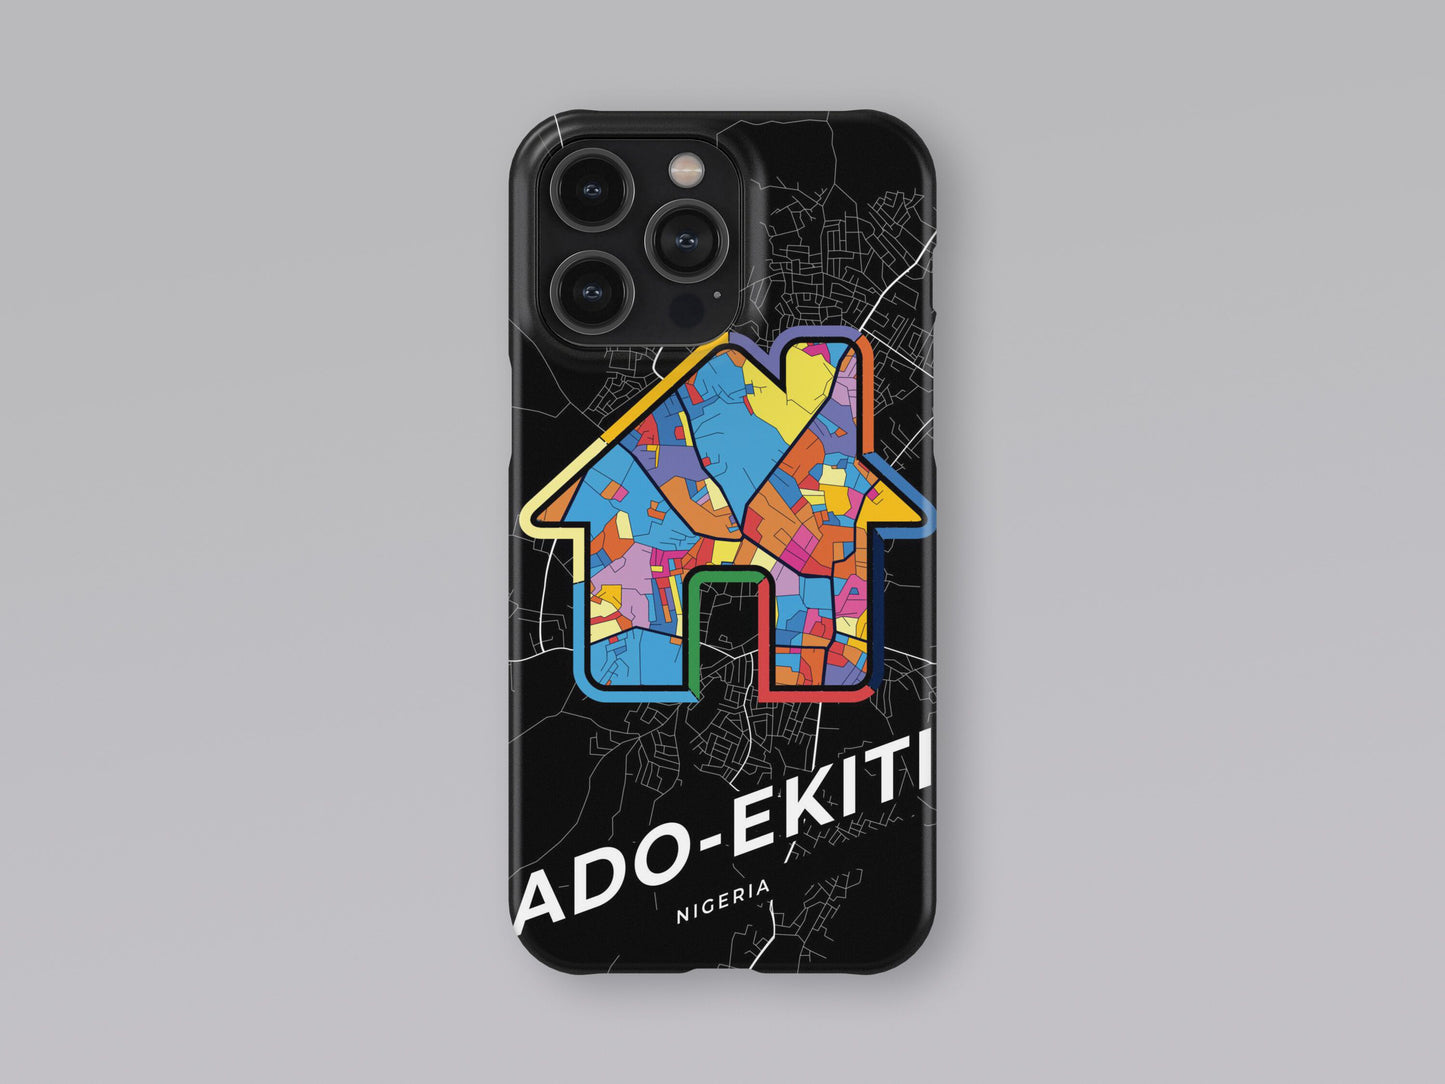 Ado-Ekiti Nigeria slim phone case with colorful icon. Birthday, wedding or housewarming gift. Couple match cases. 3